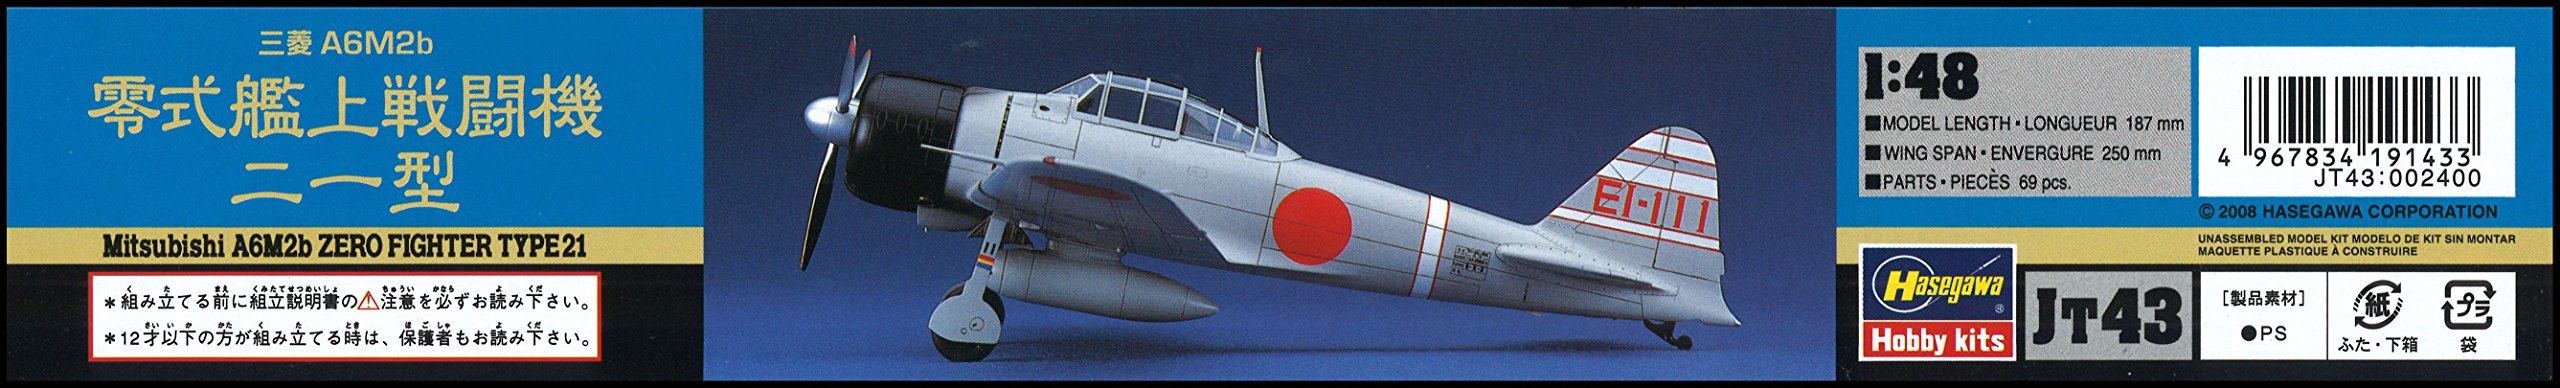 HASEGAWA 1/48 Mitsubishi A6M2B Zero Fighter Type 21 Modèle en plastique